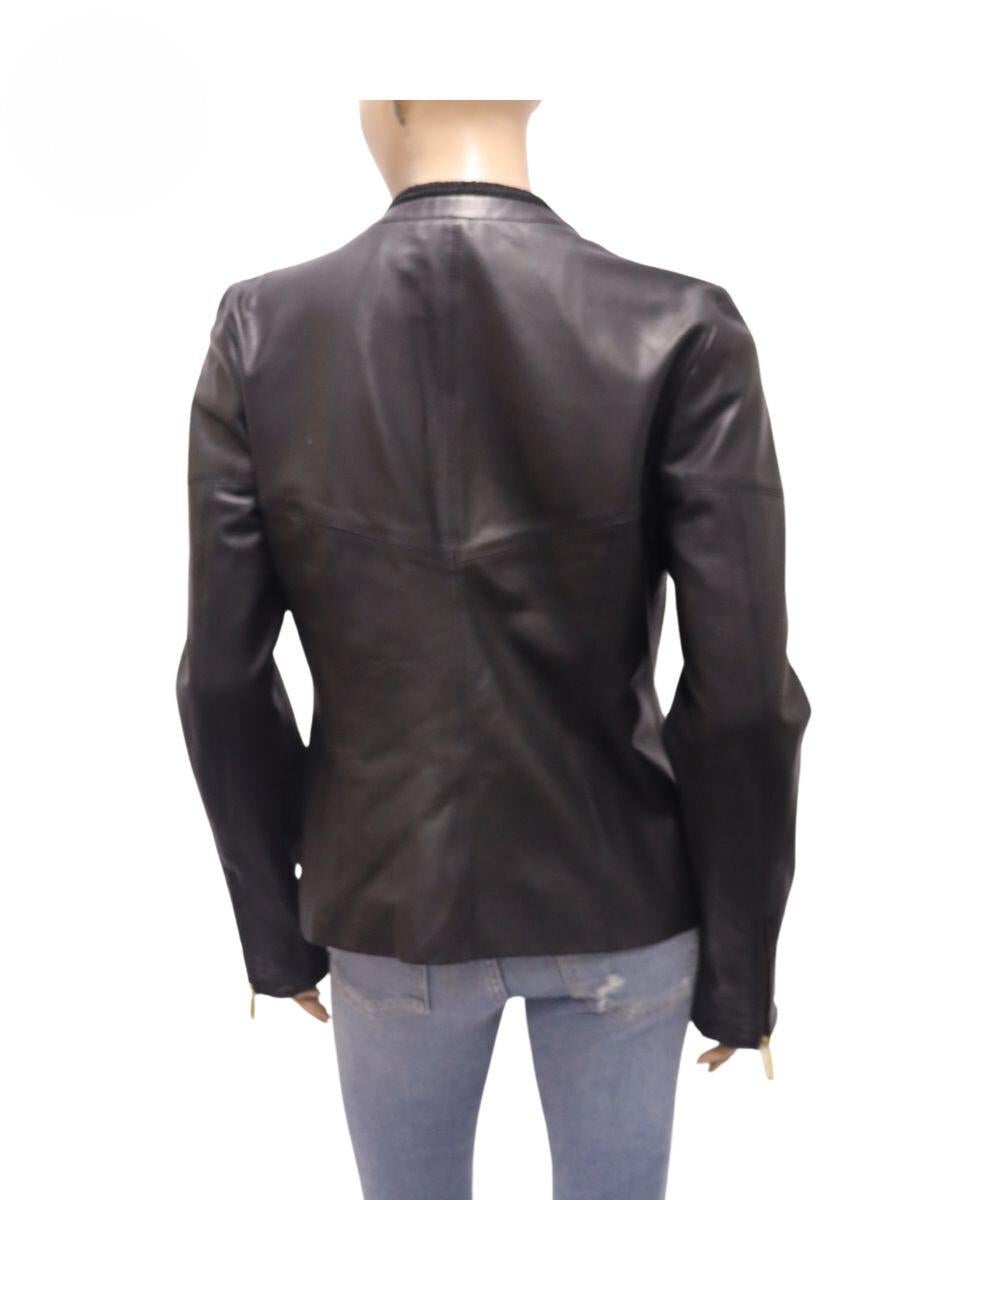 Just Cavalli Faux Leather Biker Jacket Size IT 46 In Good Condition For Sale In Amman, JO